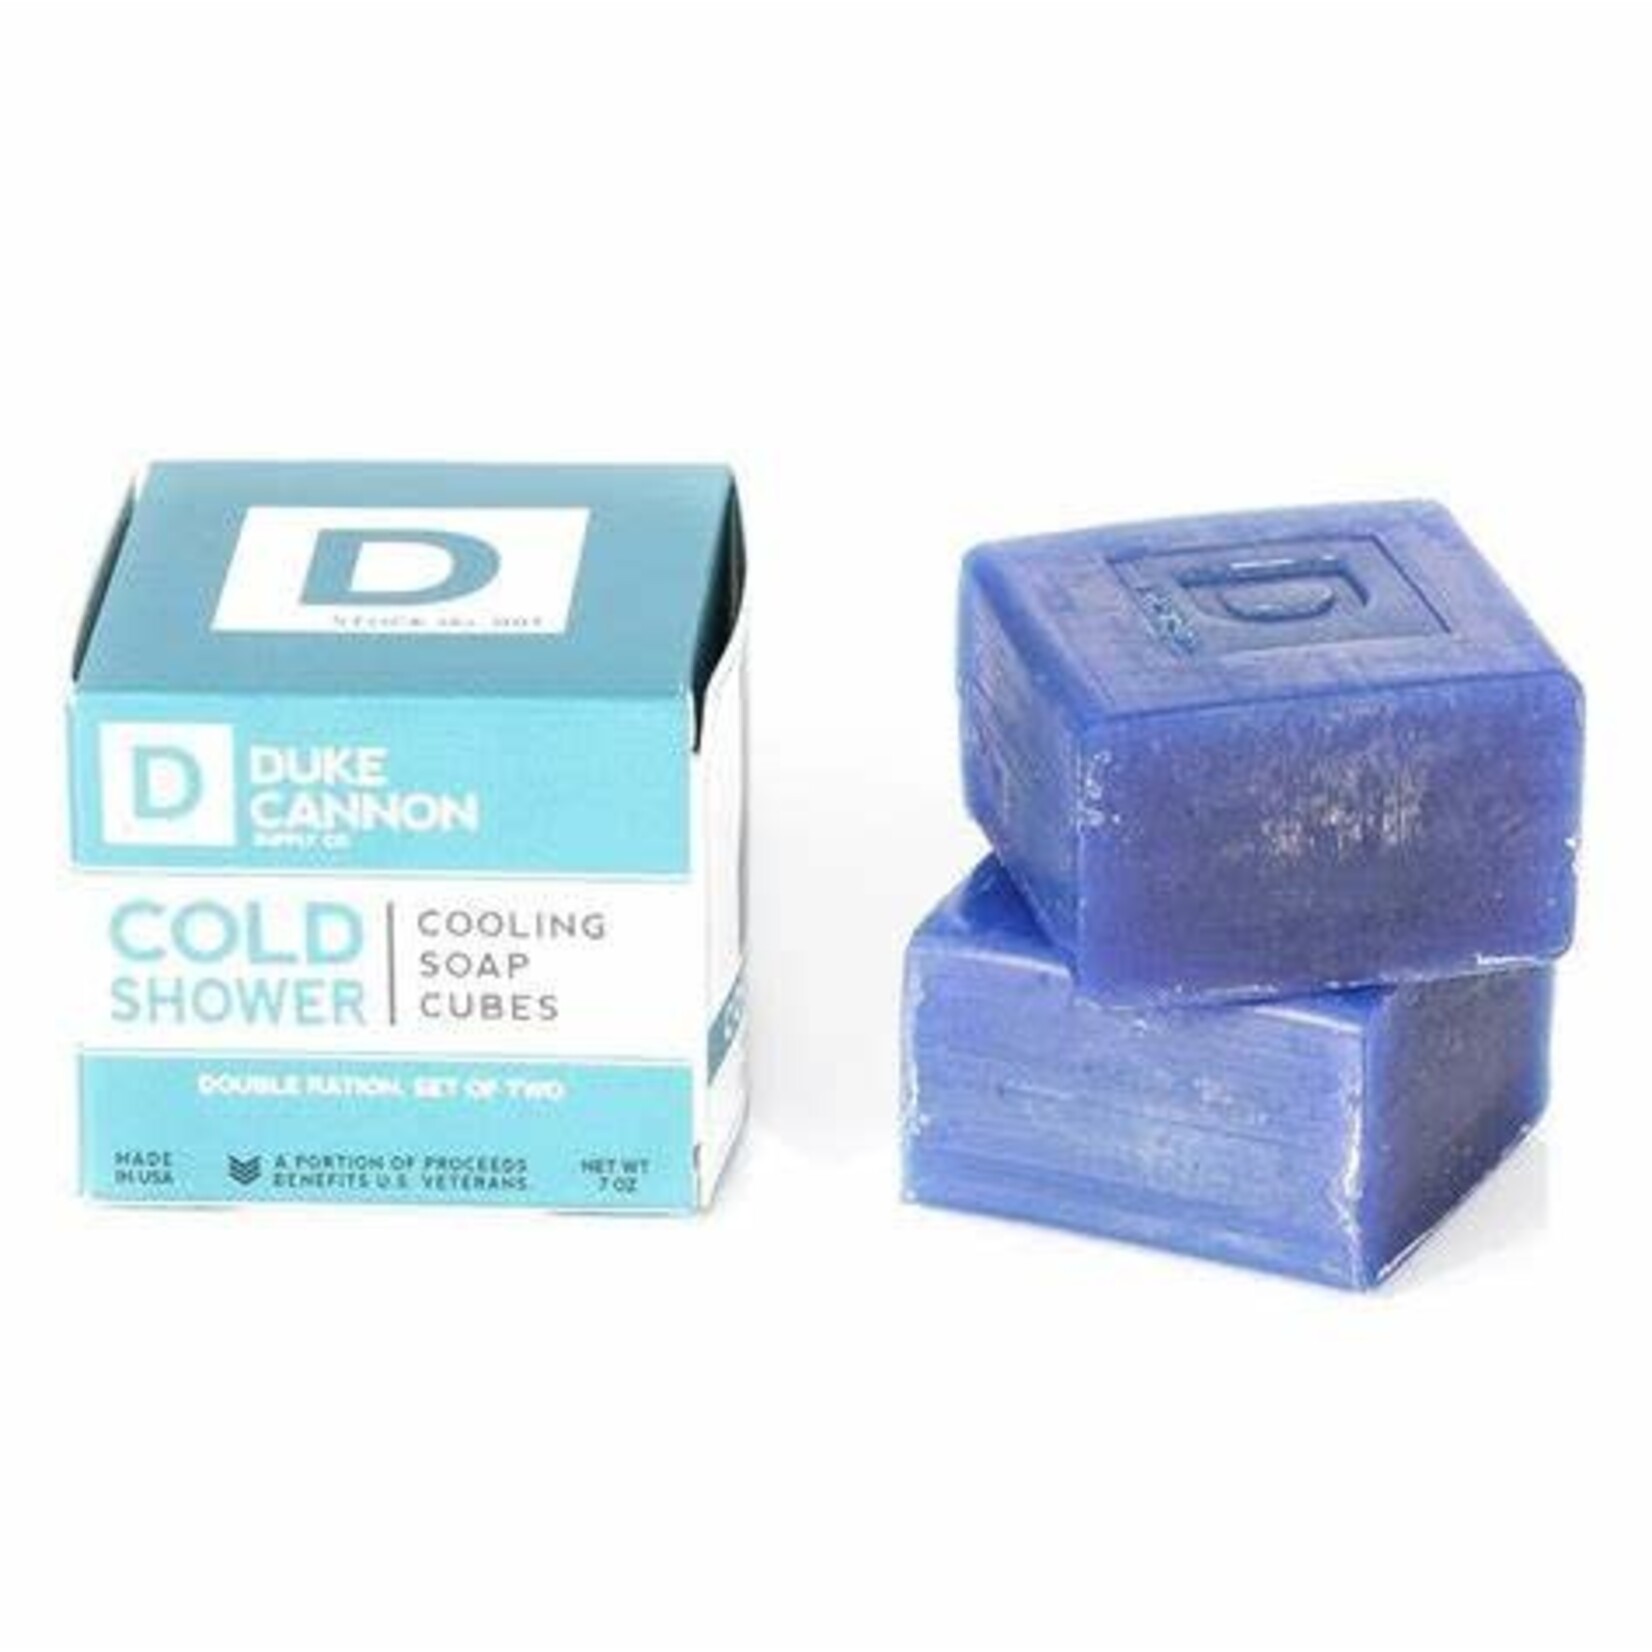 Duke Cannon Duke Cannon COLD SHOWER Cooling Soap Cubes